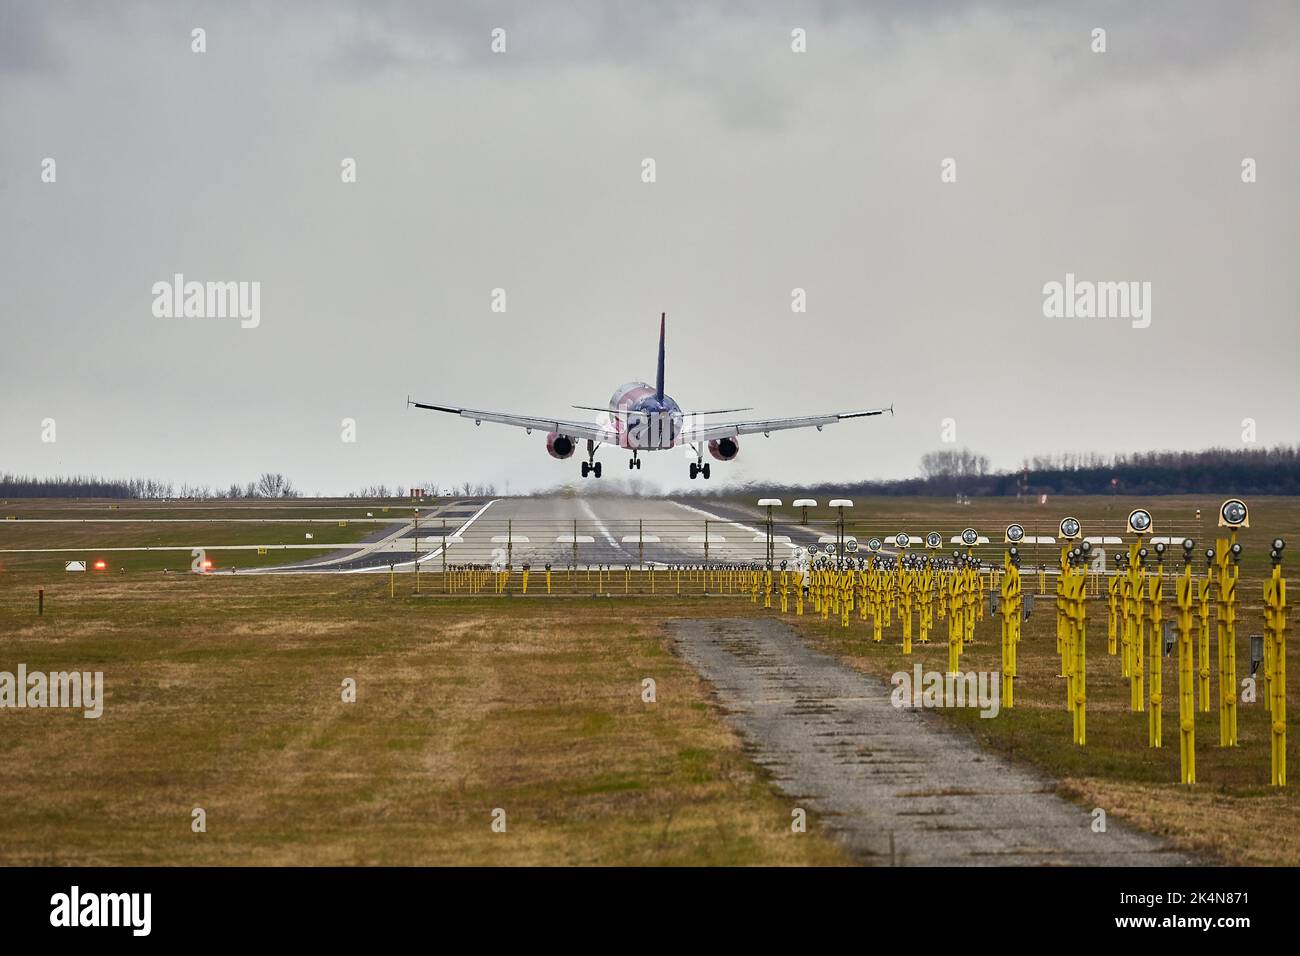 Plane landing on runway Stock Photo